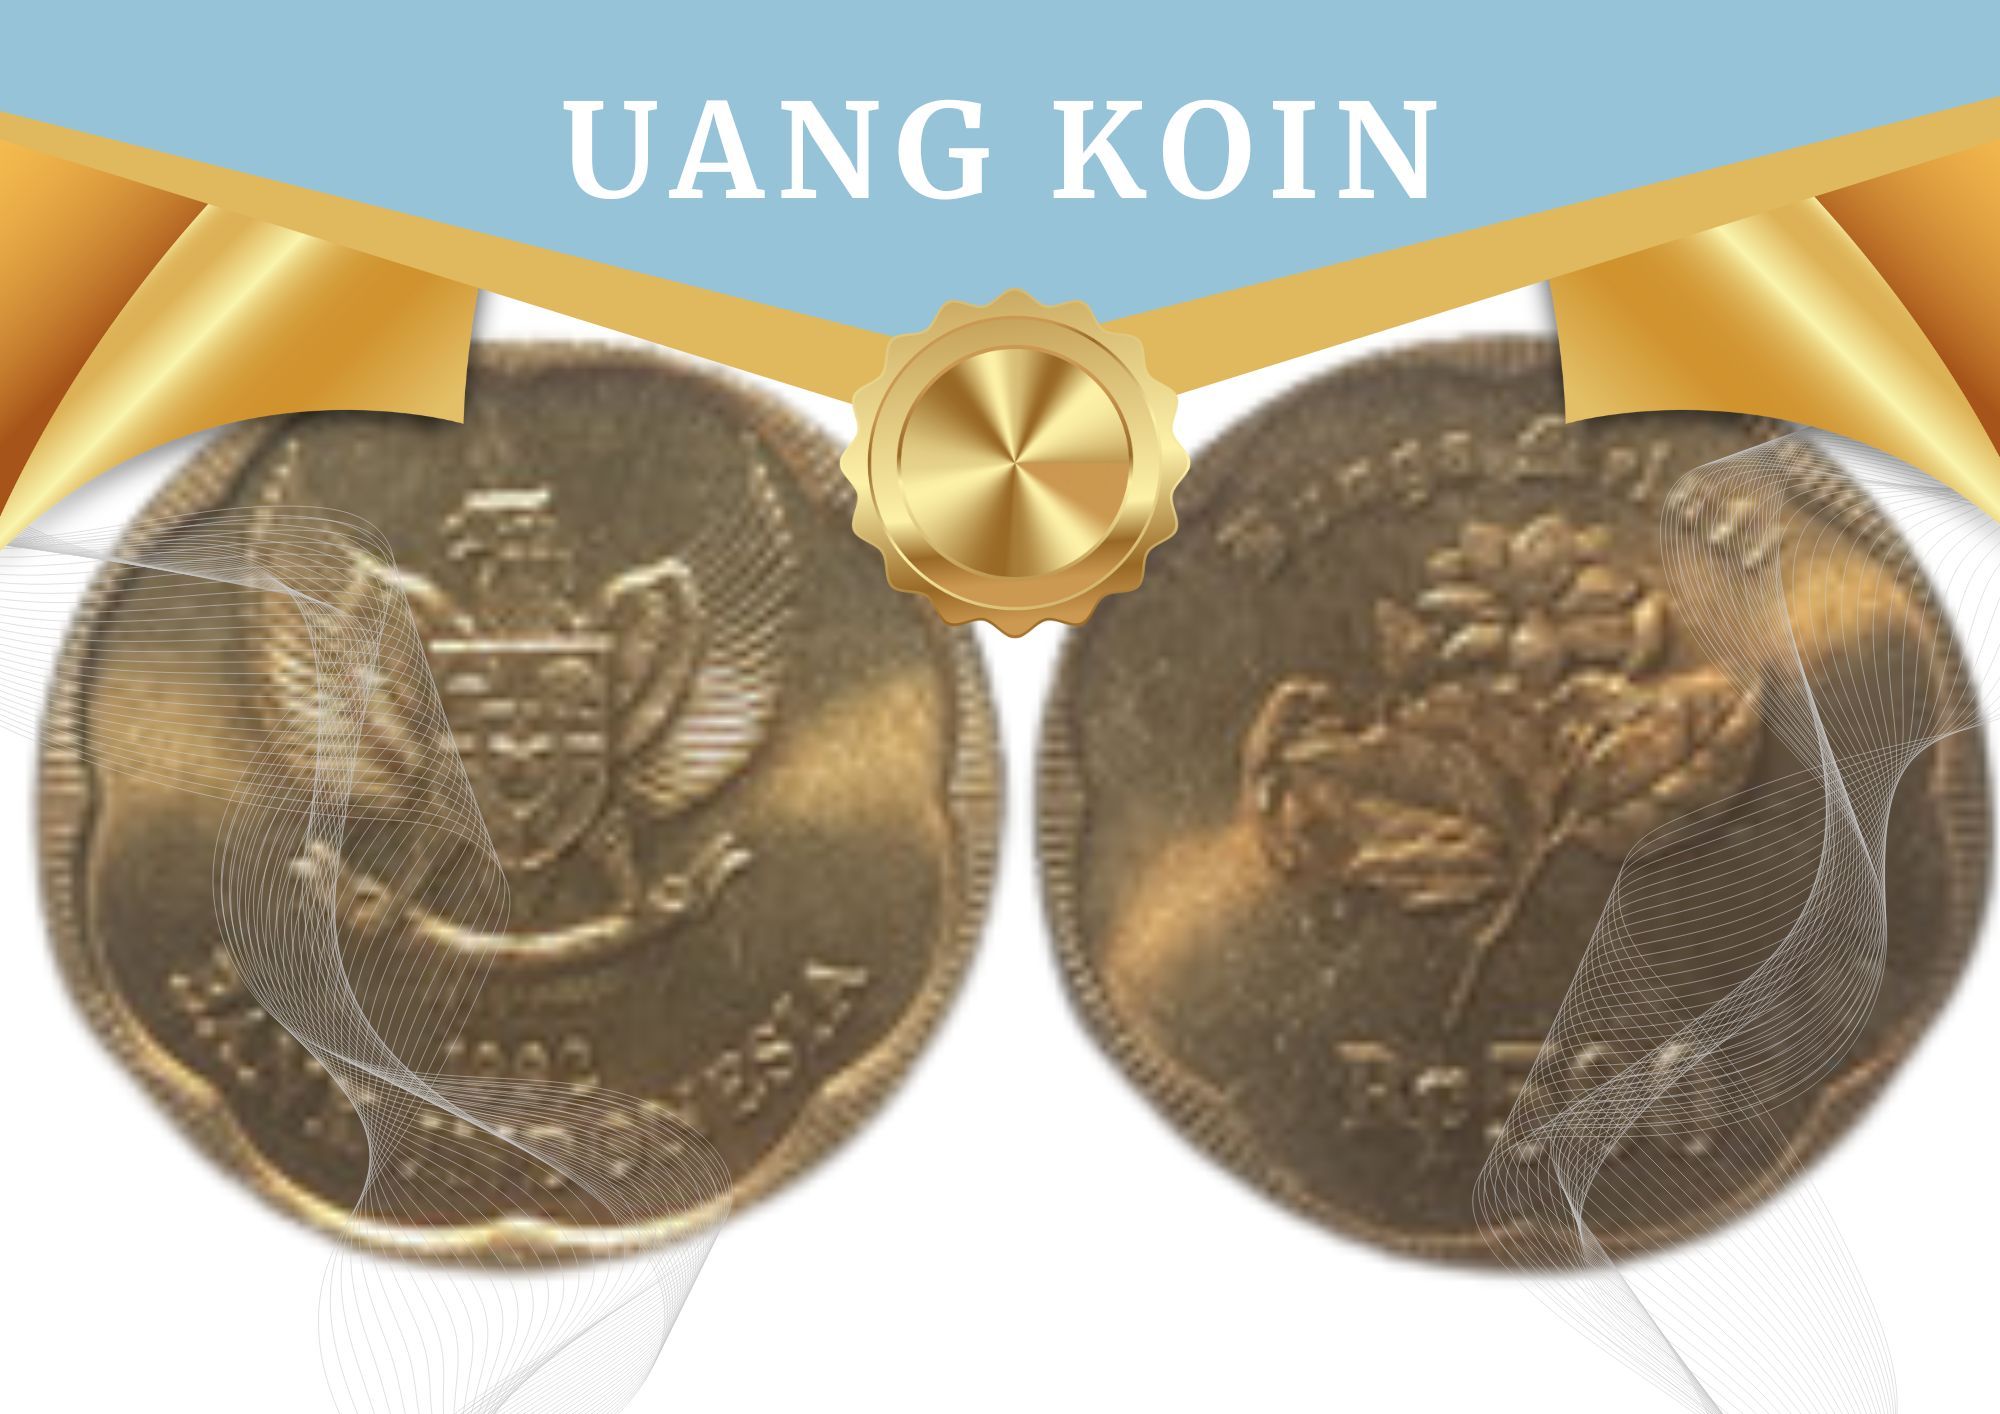 Uang koin Rp 500 Tahun Emisi 1992